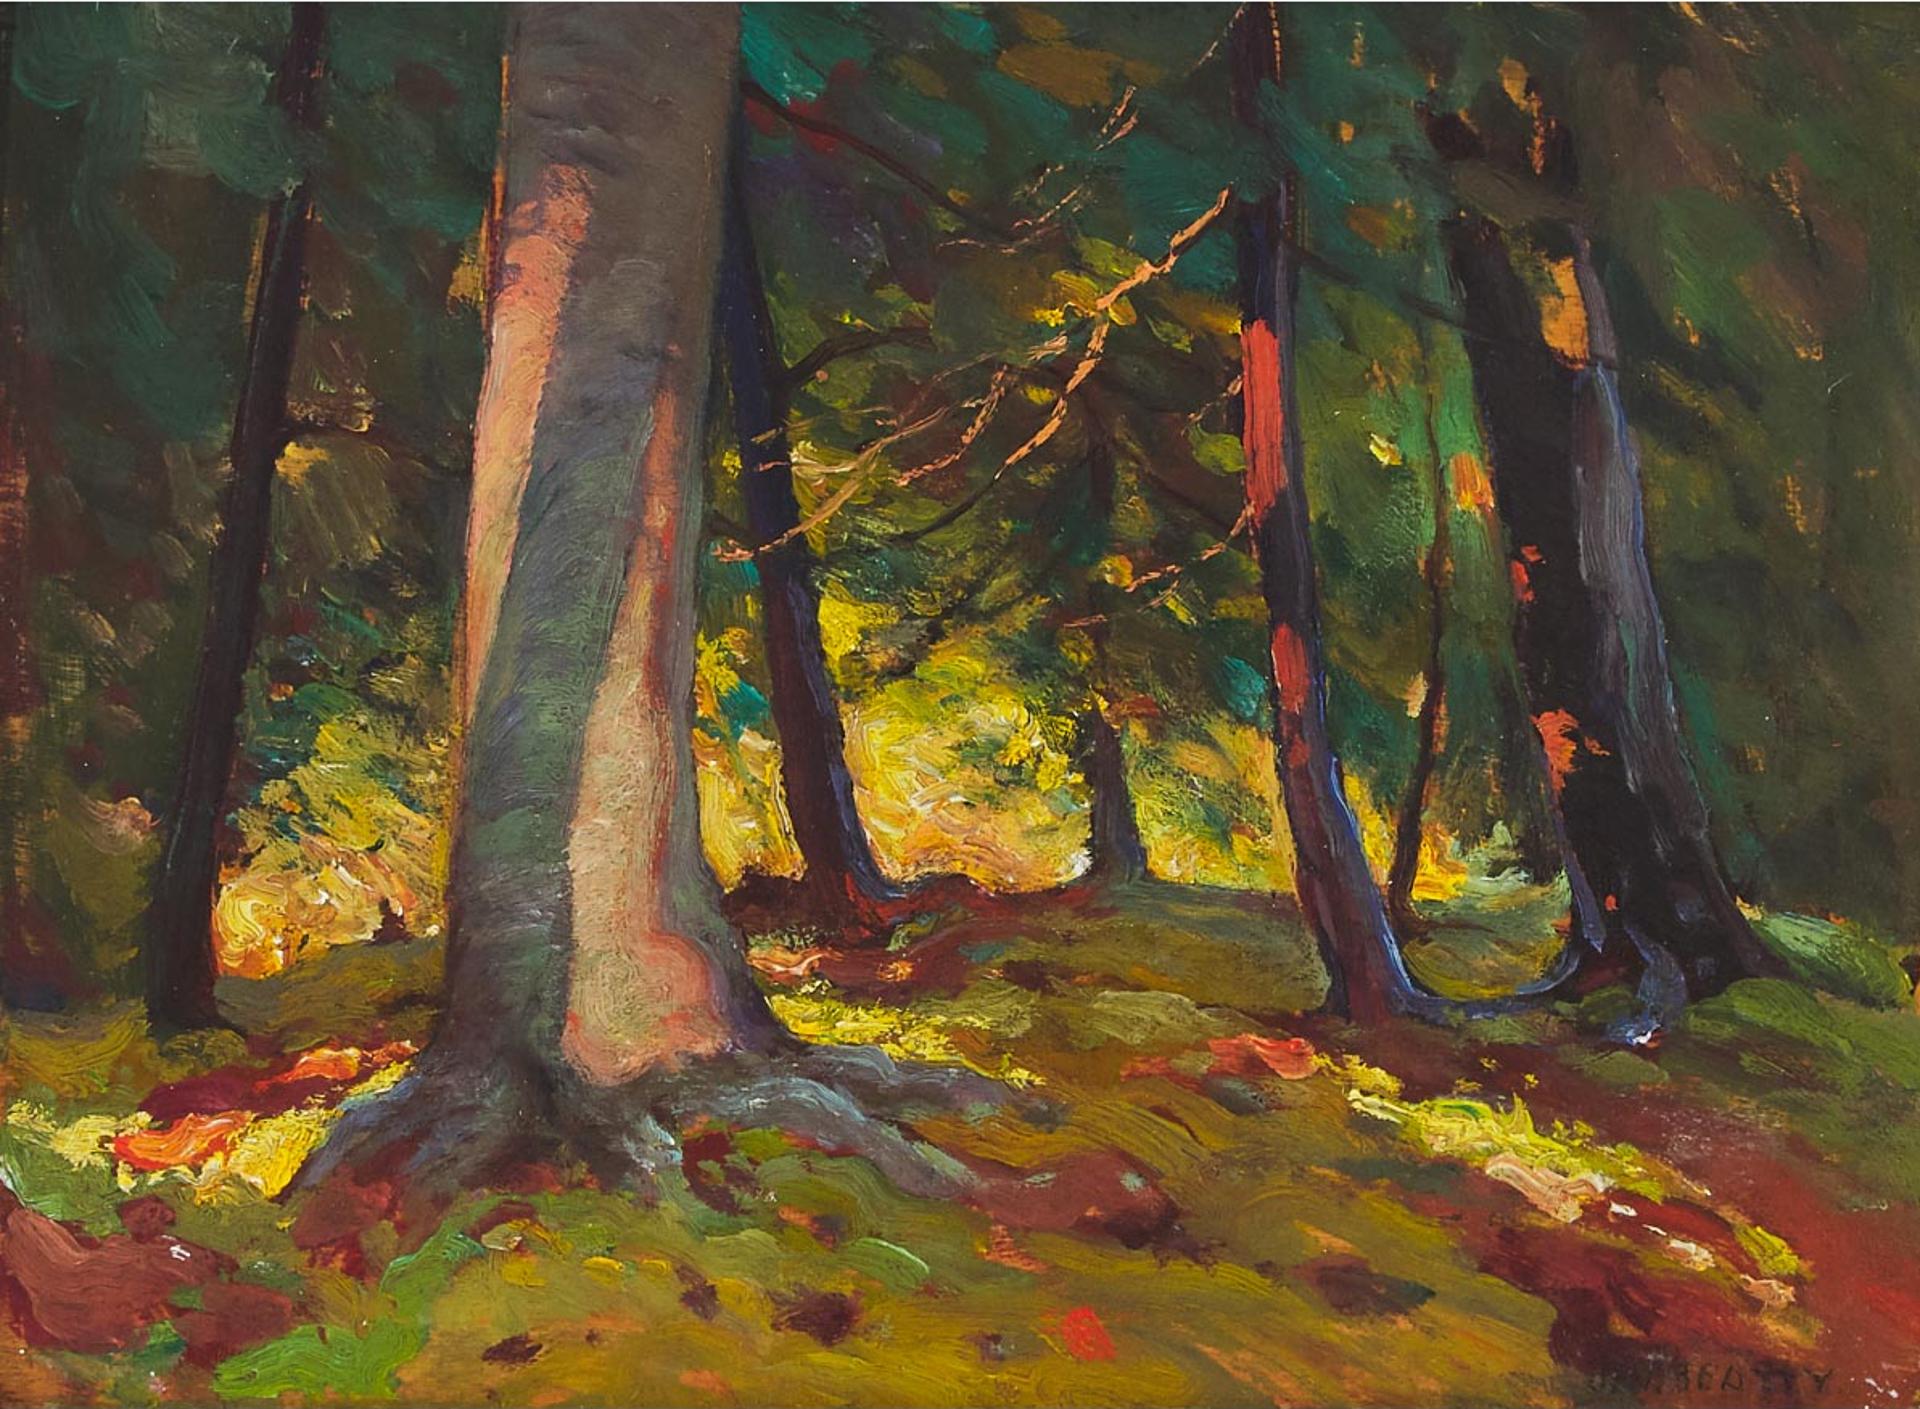 John William (J.W.) Beatty (1869-1941) - Untitled (Beech Woods), 1927